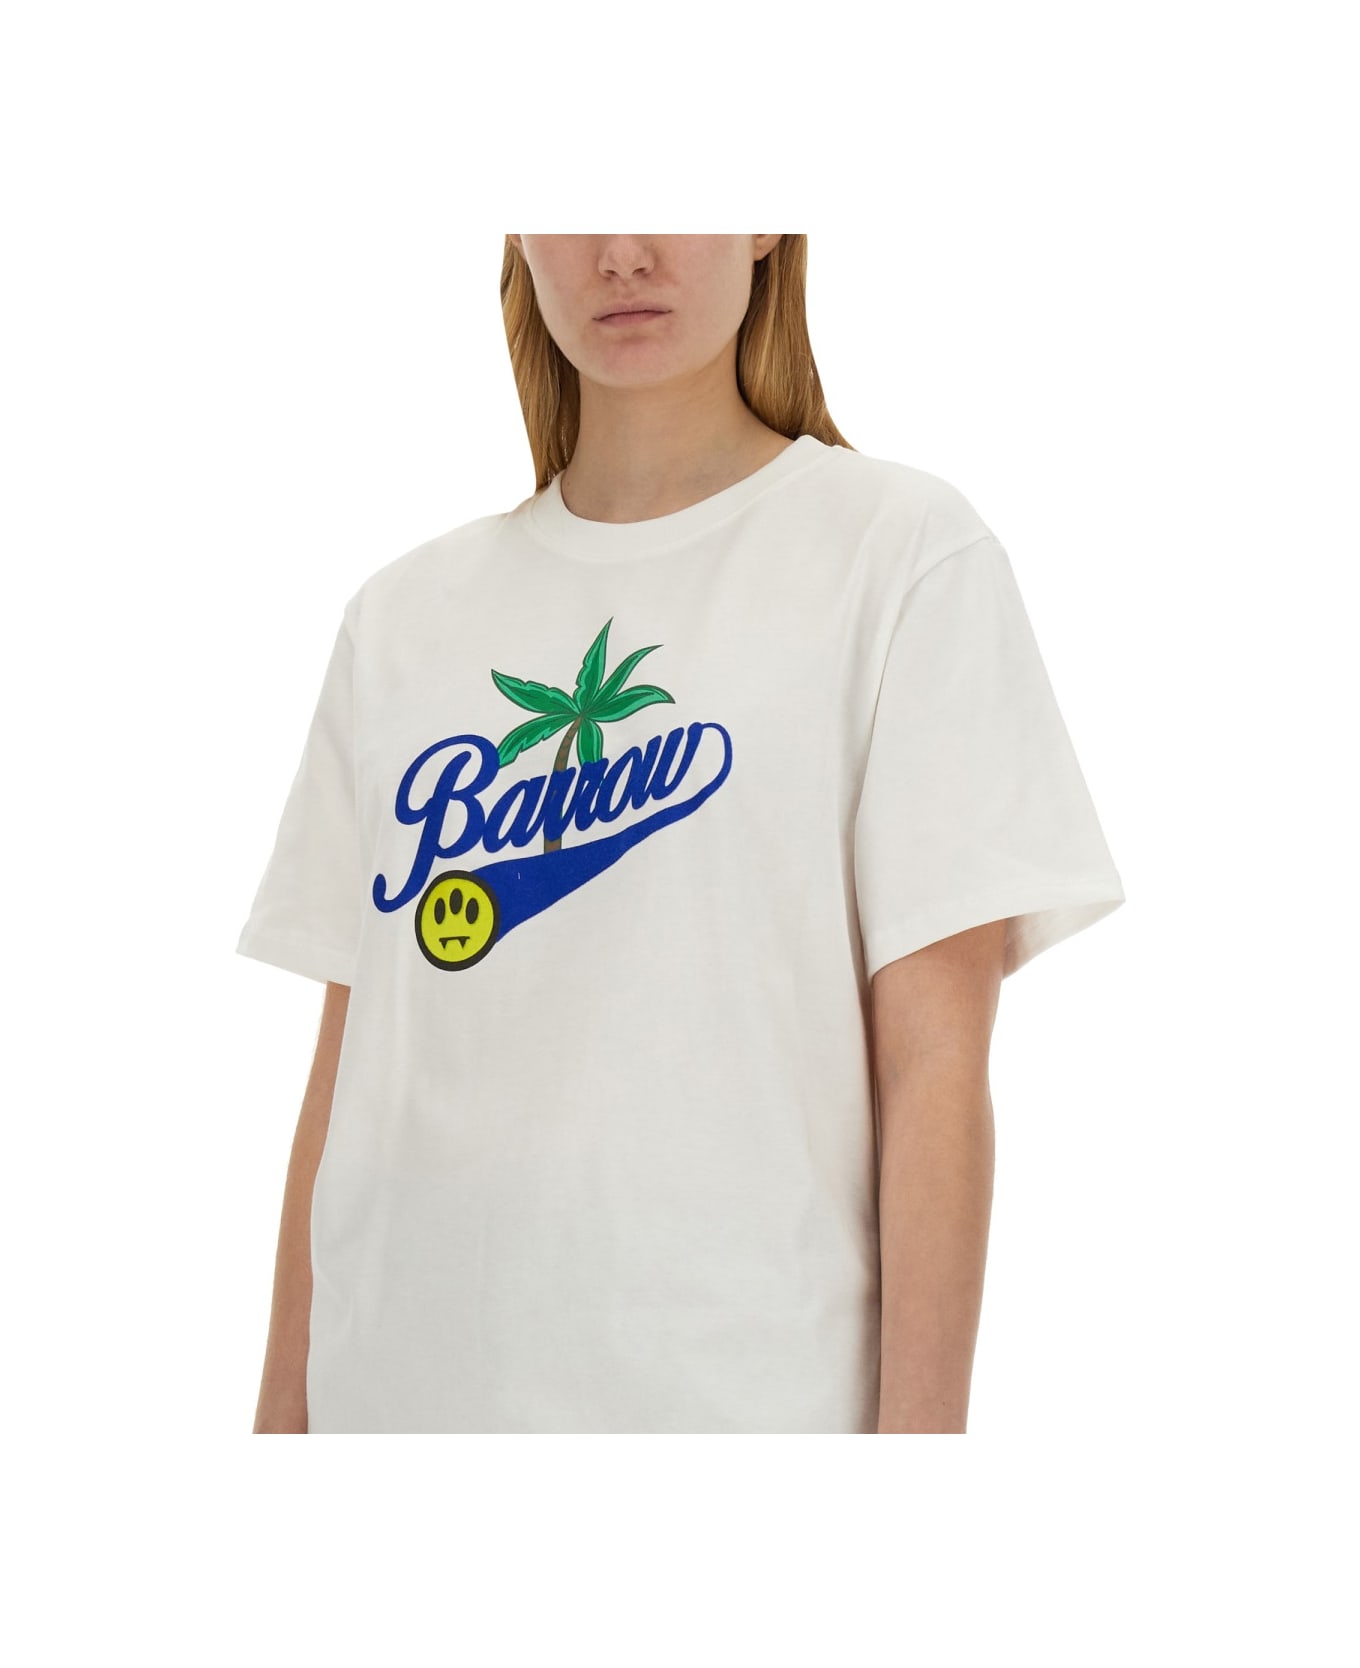 Barrow T-shirt With Logo - Bianco